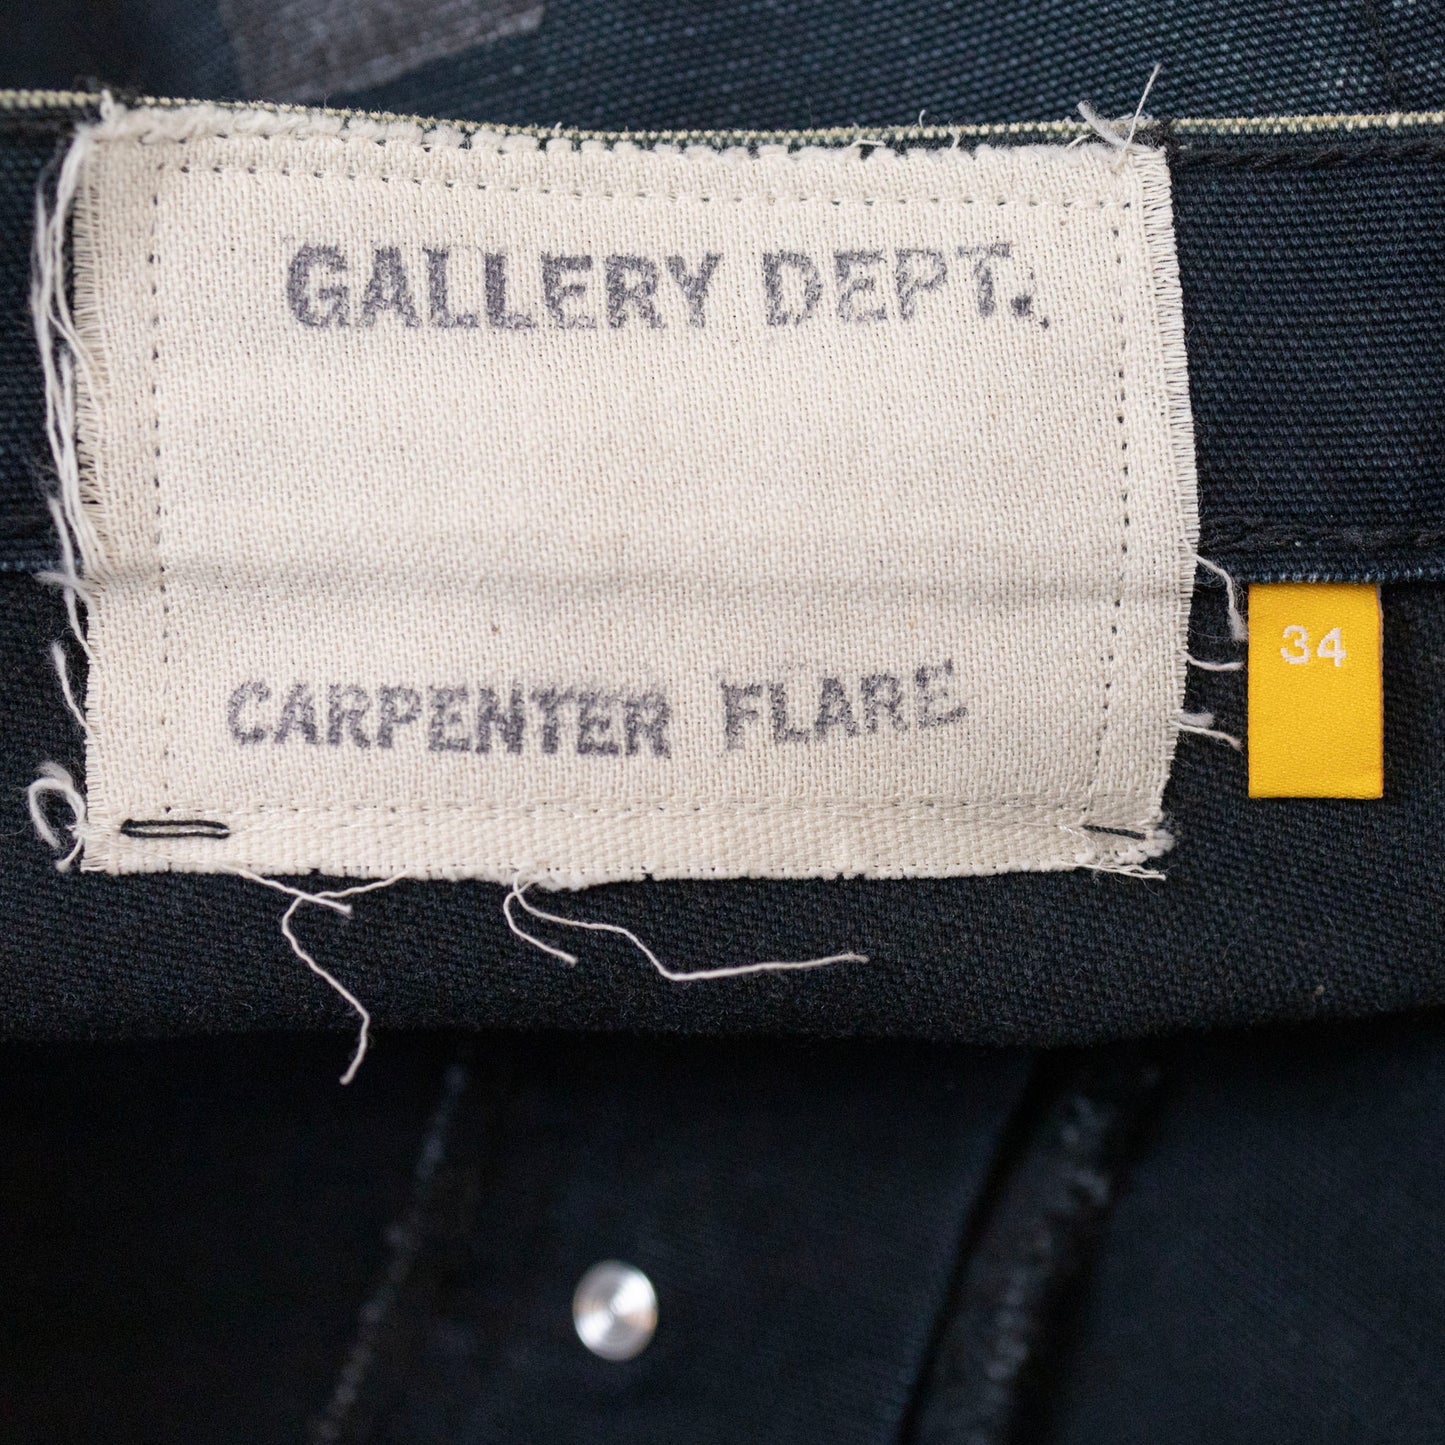 Carpenter Flare Pants